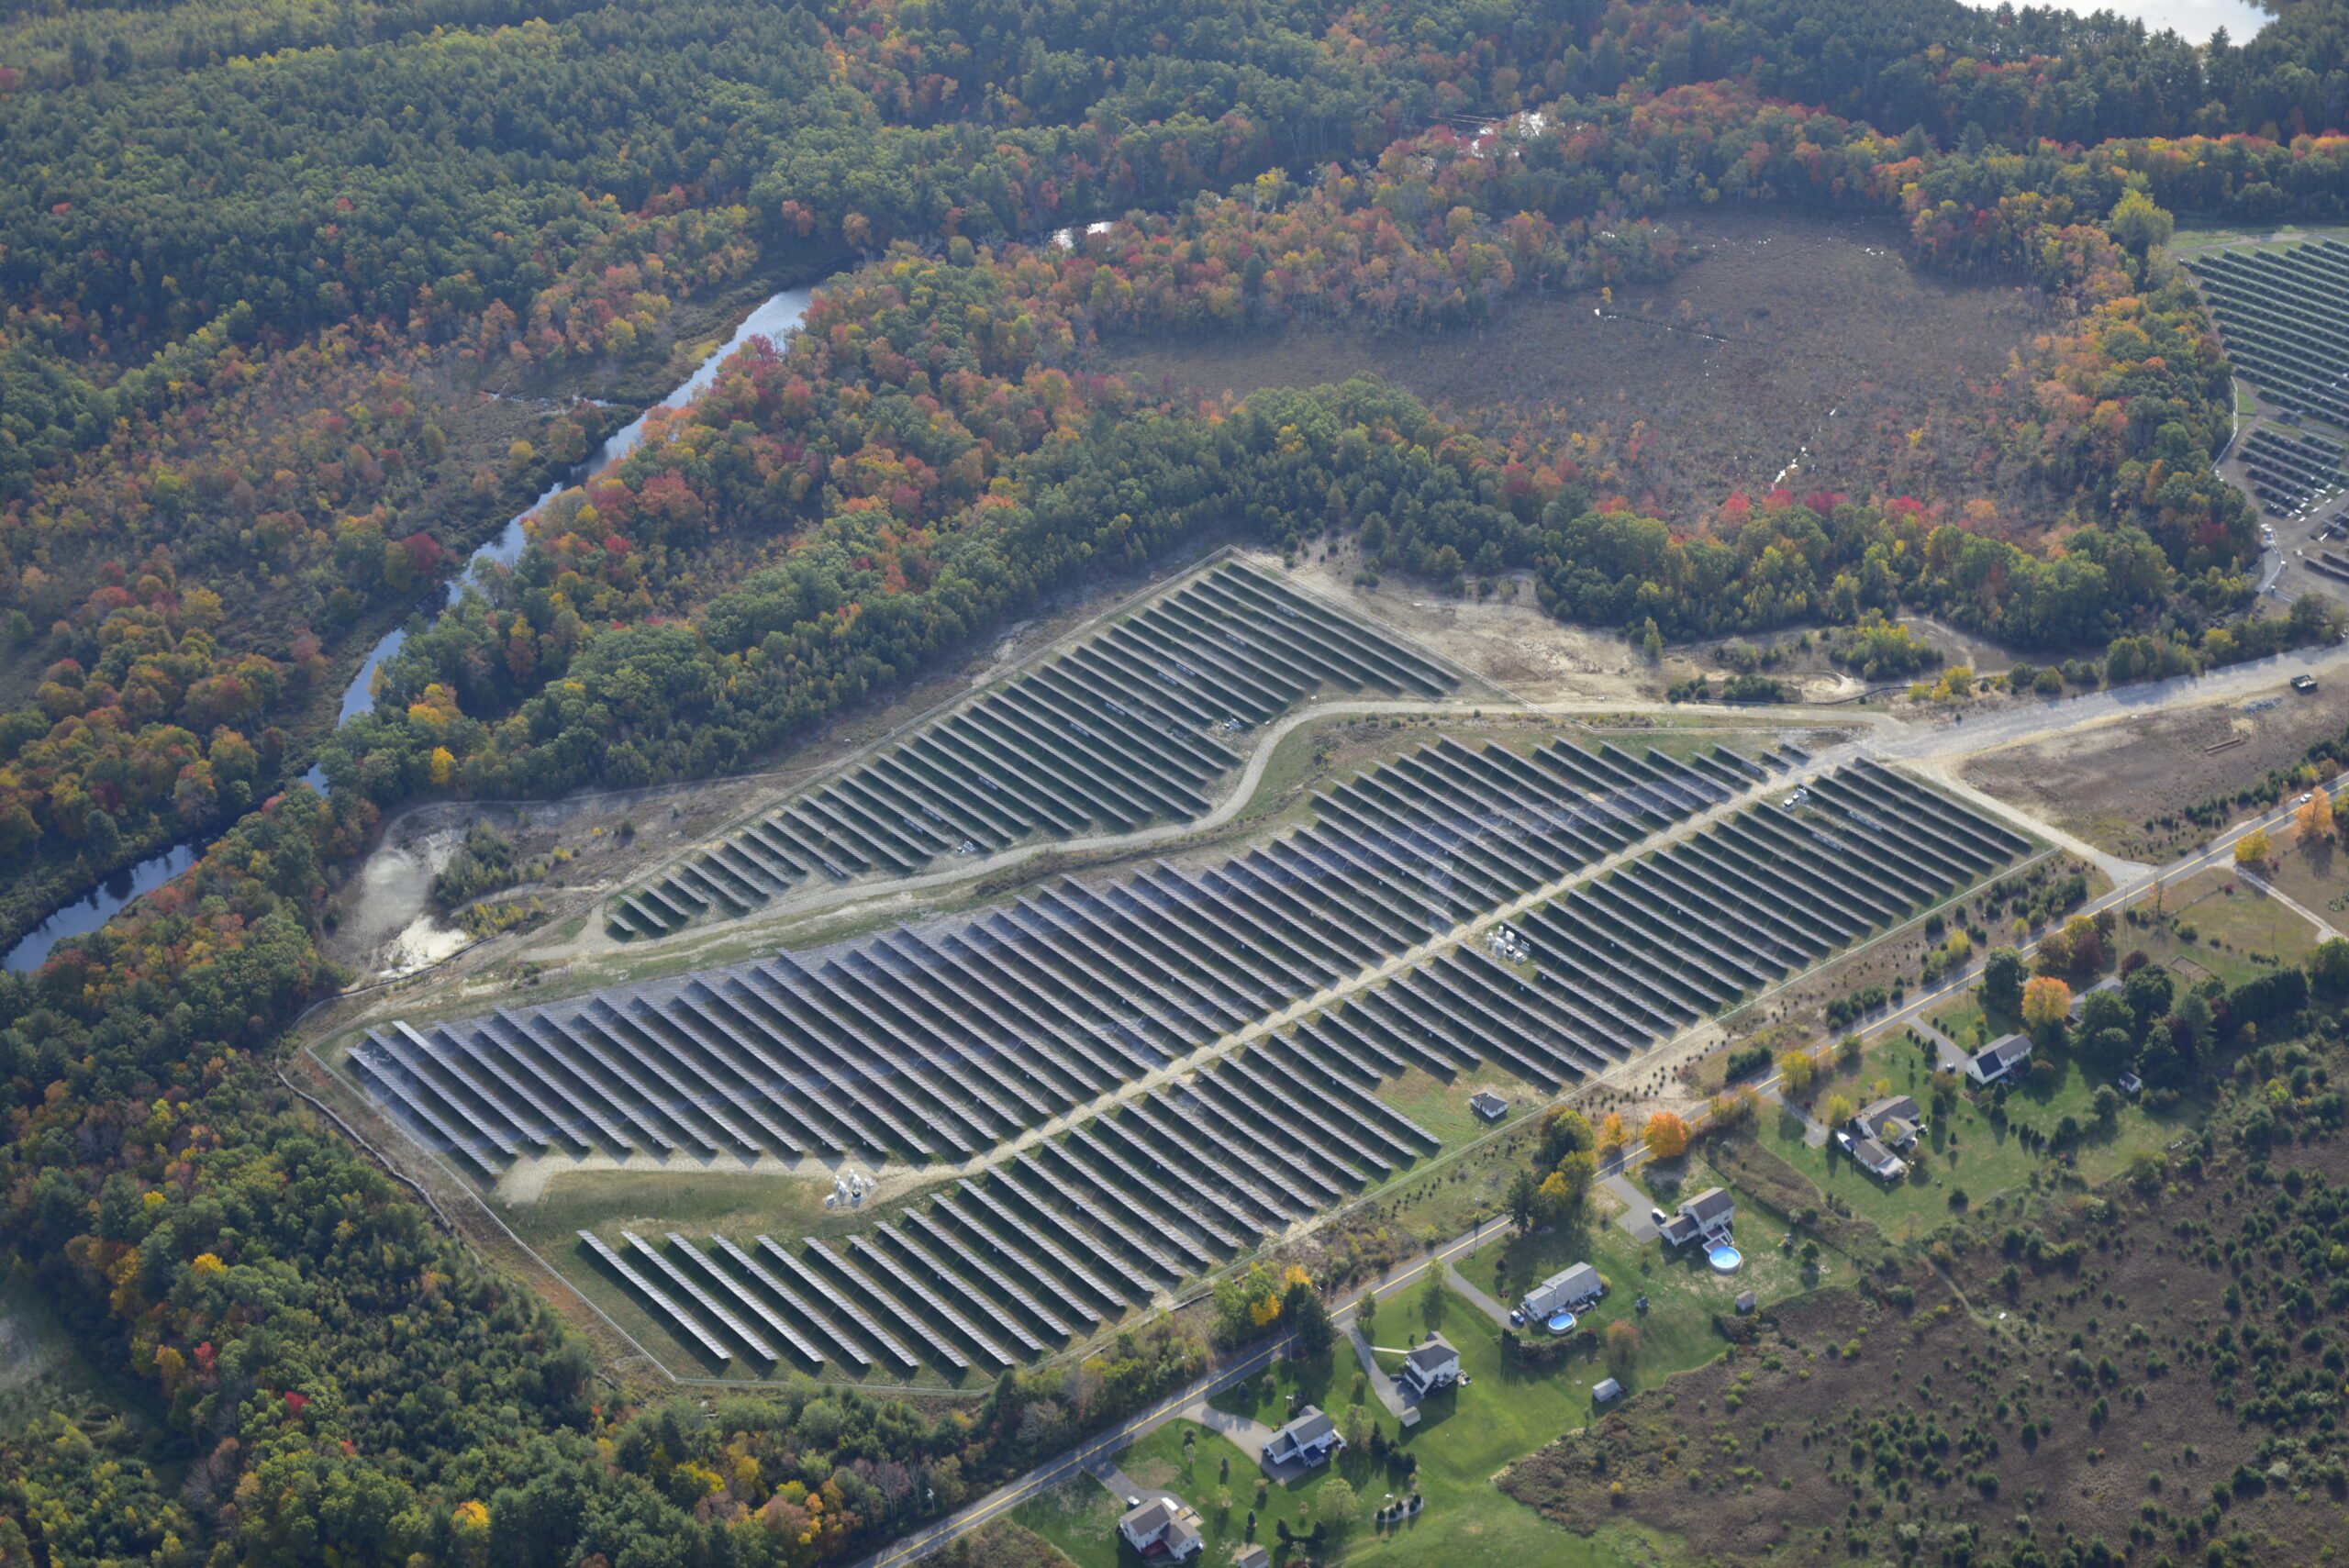 Palmer Airfield - Syncarpha Capital solar project in Palmer, Massachusetts - 5